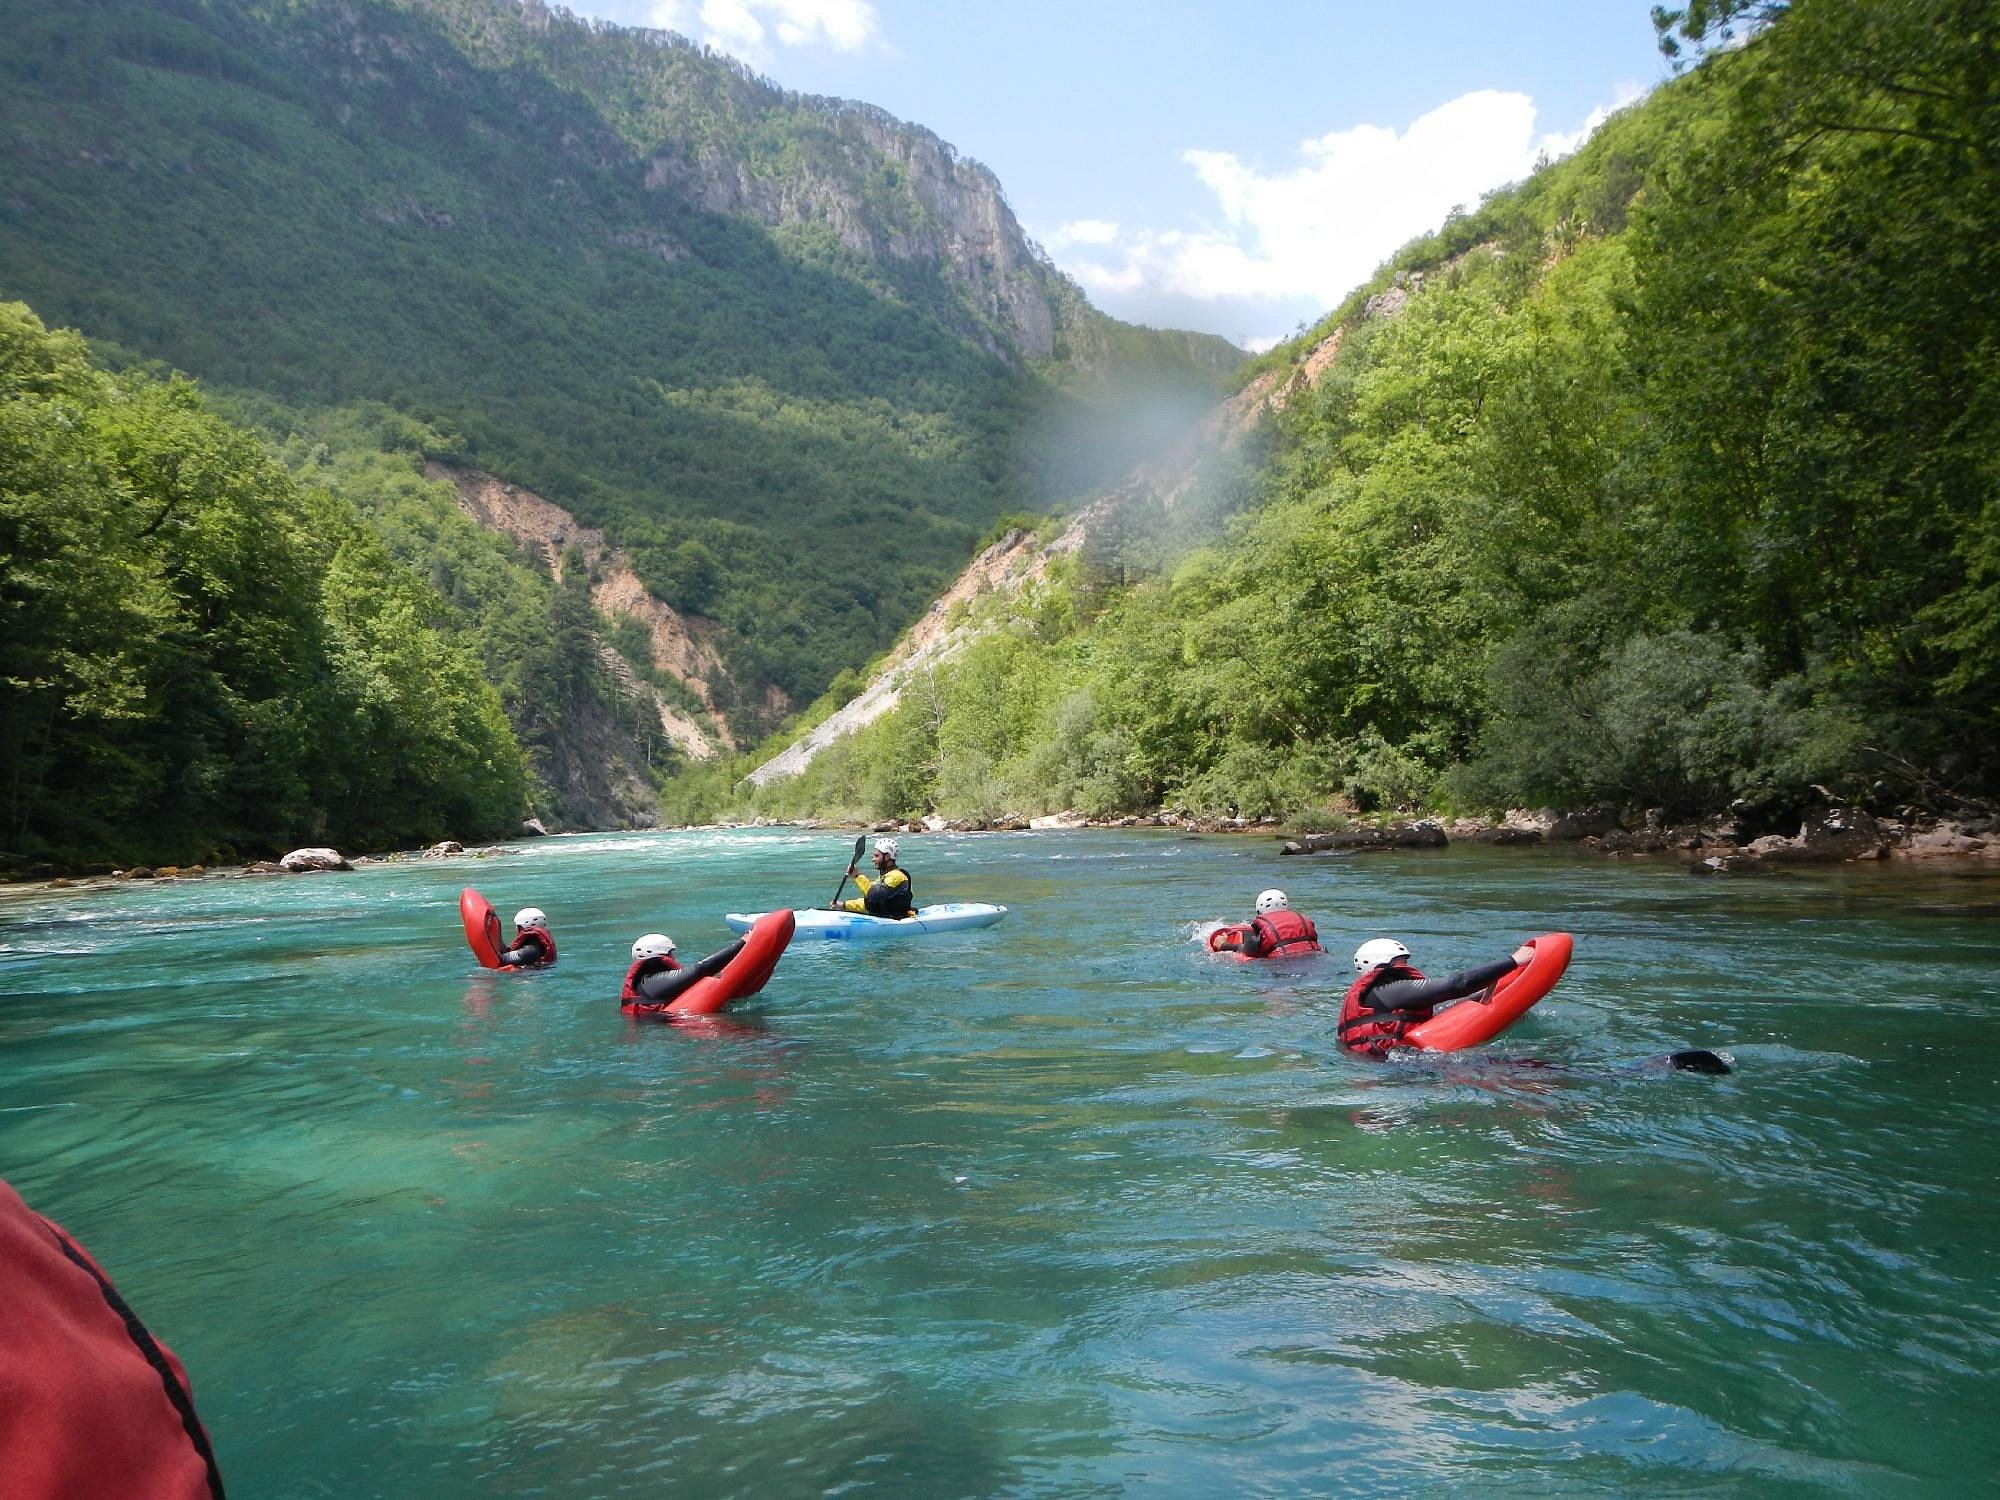 adriatic kayak tours